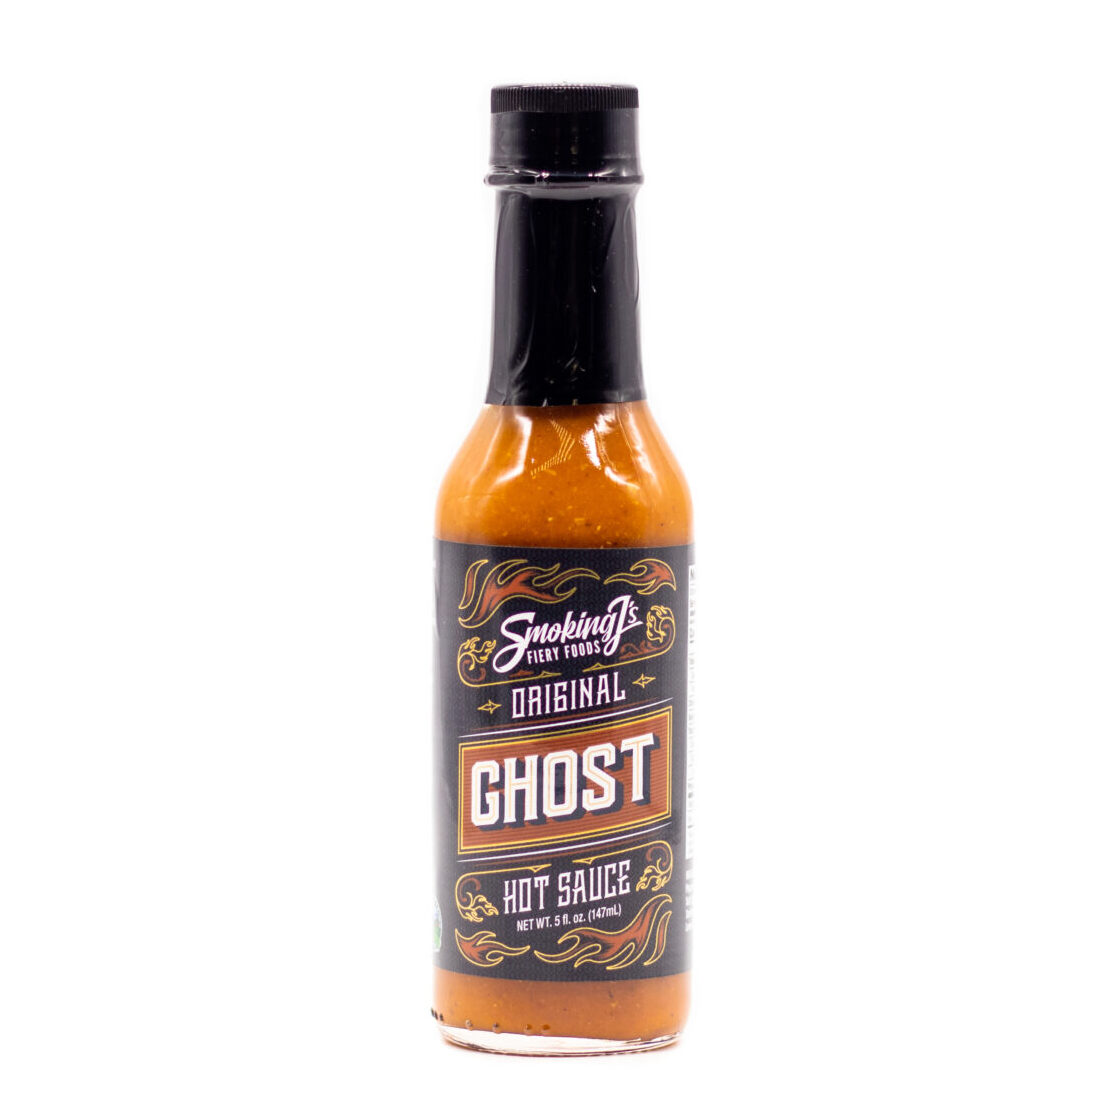 Smoking J's Original Ghost Hot Sauce